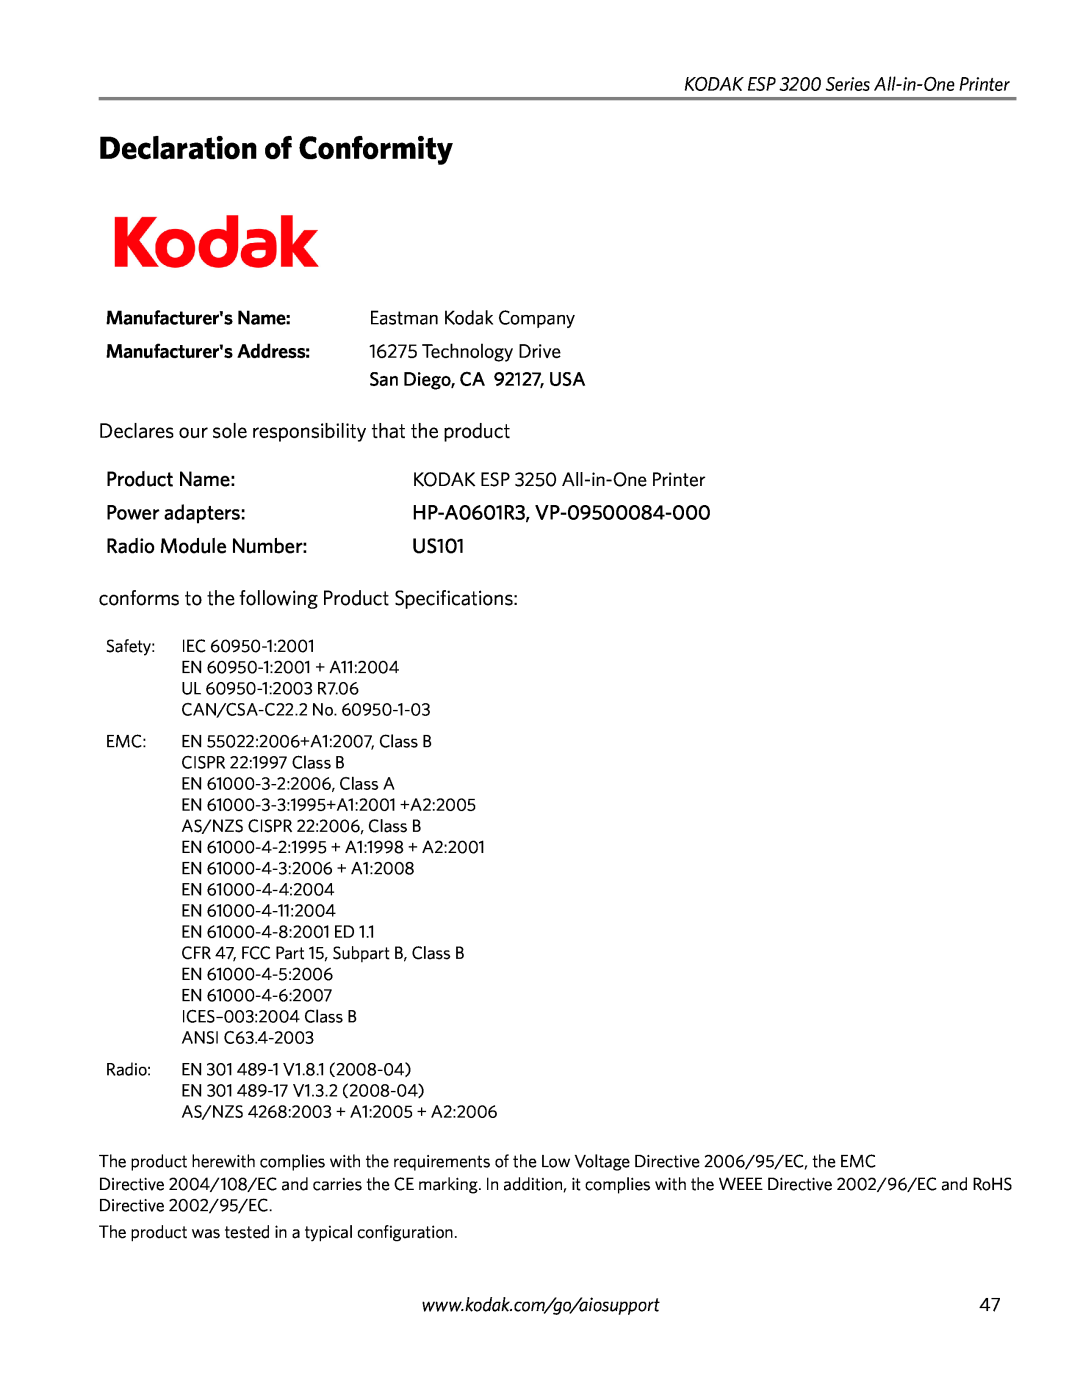 Kodak ESP 3250 Declaration of Conformity, KODAK ESP 3200 Series All-in-One Printer, Manufacturers Name, Technology Drive 